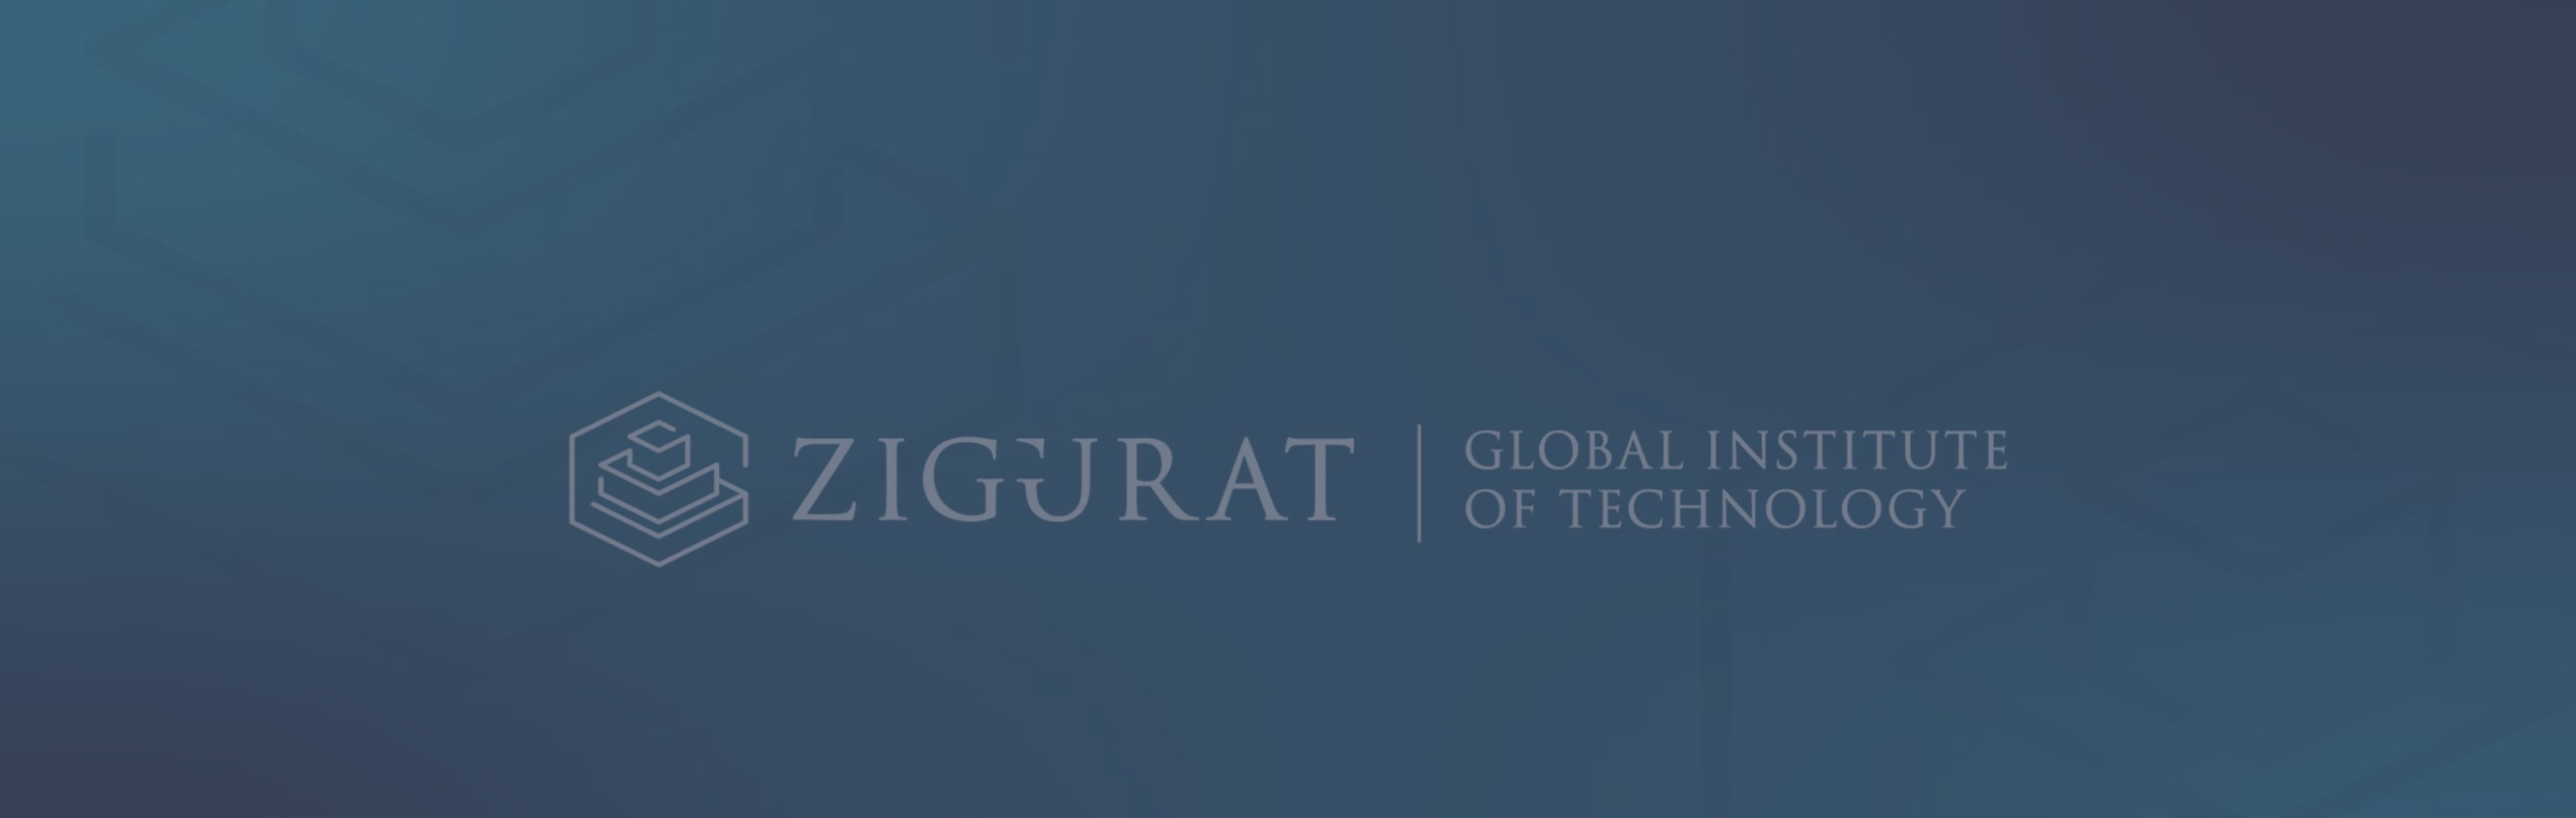 Zigurat Global Insitute of Technology